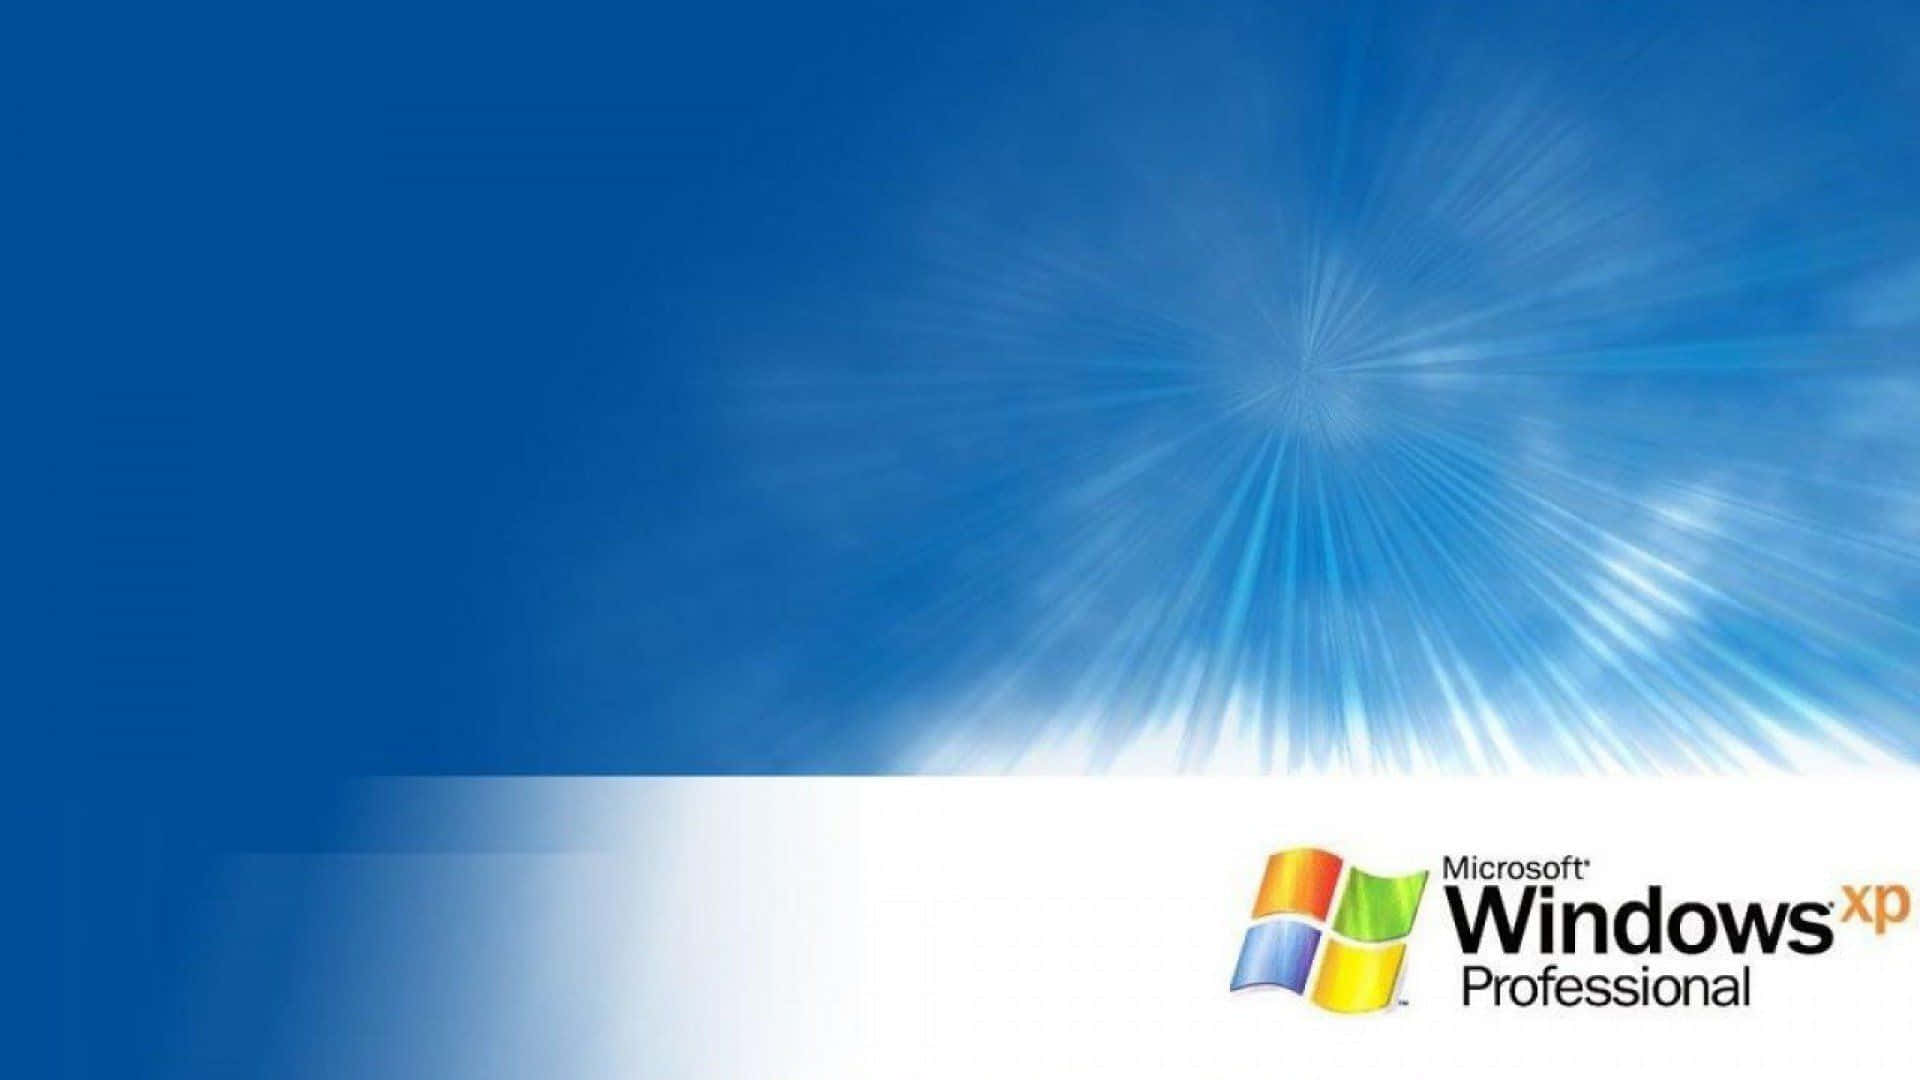 Windows XP: introducing a new era in computing